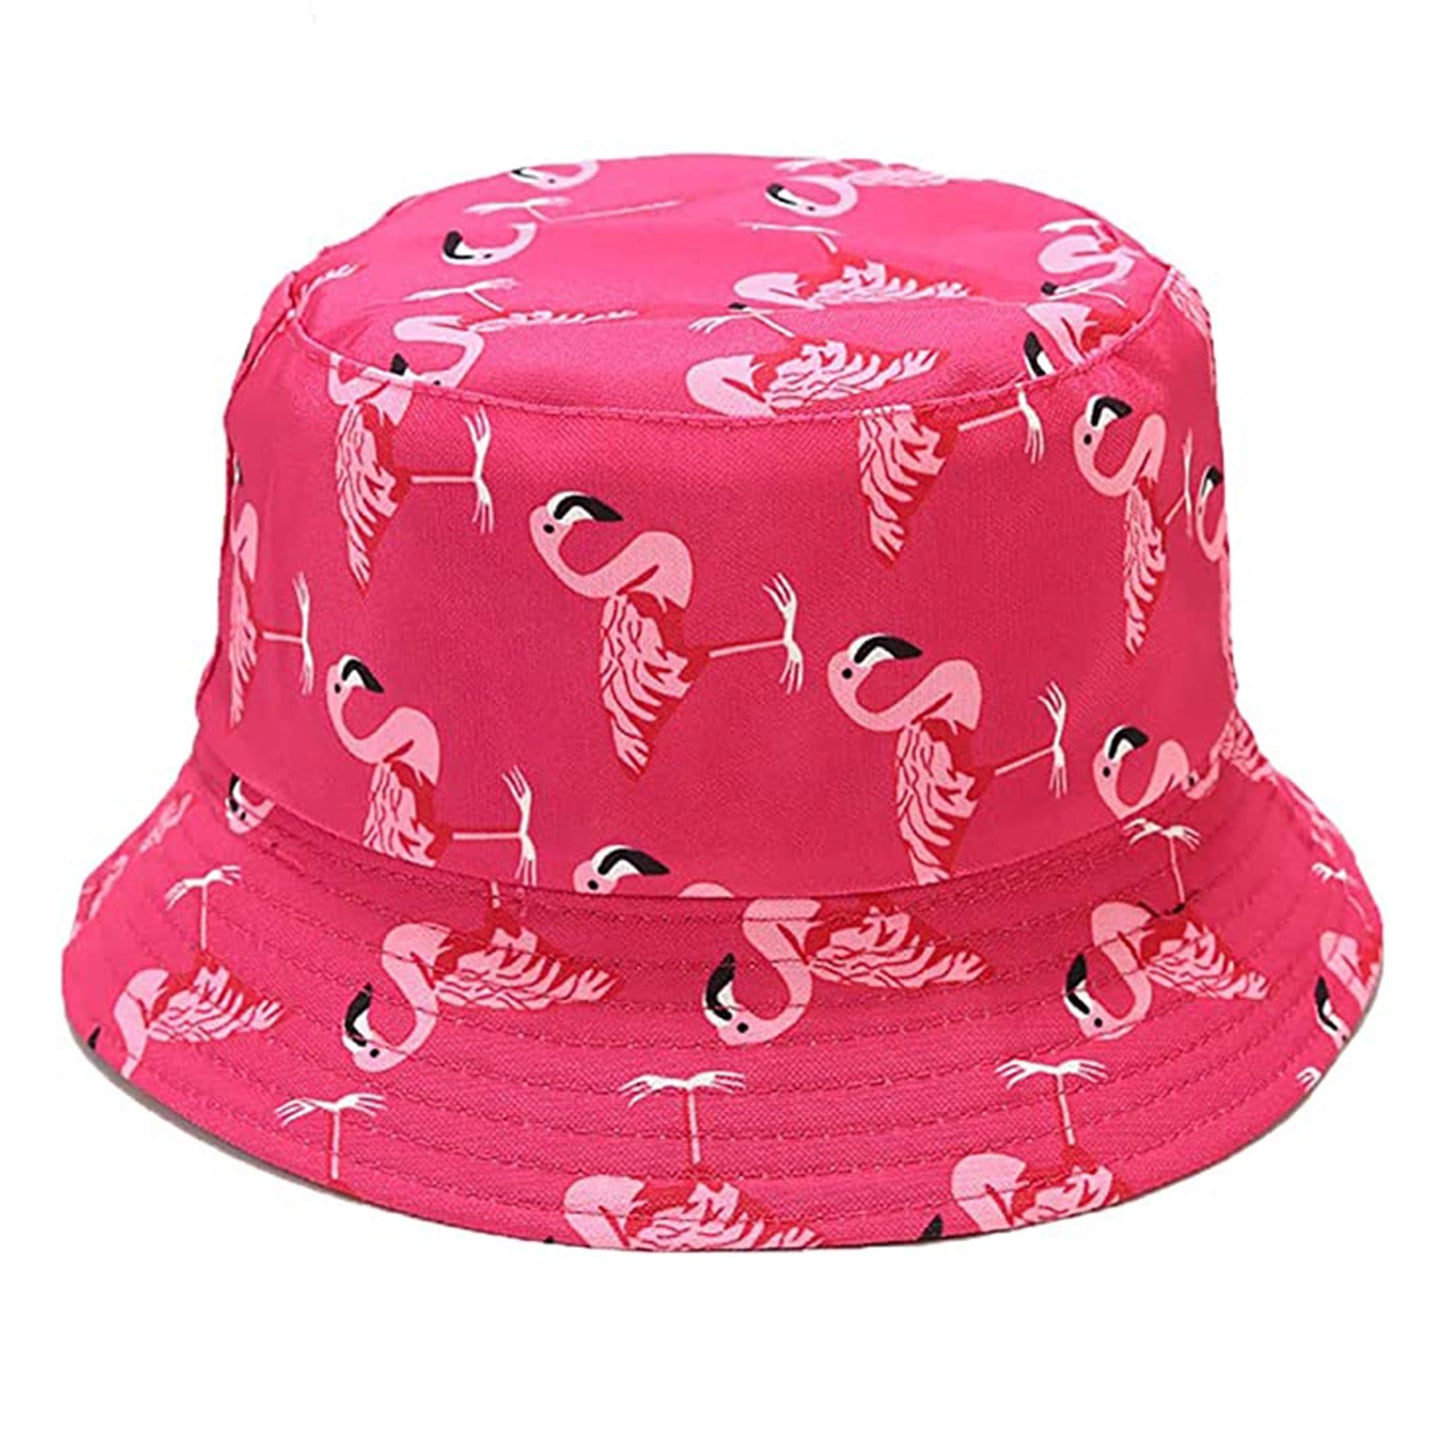 Bucket hat 100% cotton with reversible design, flamingo pink festival hat